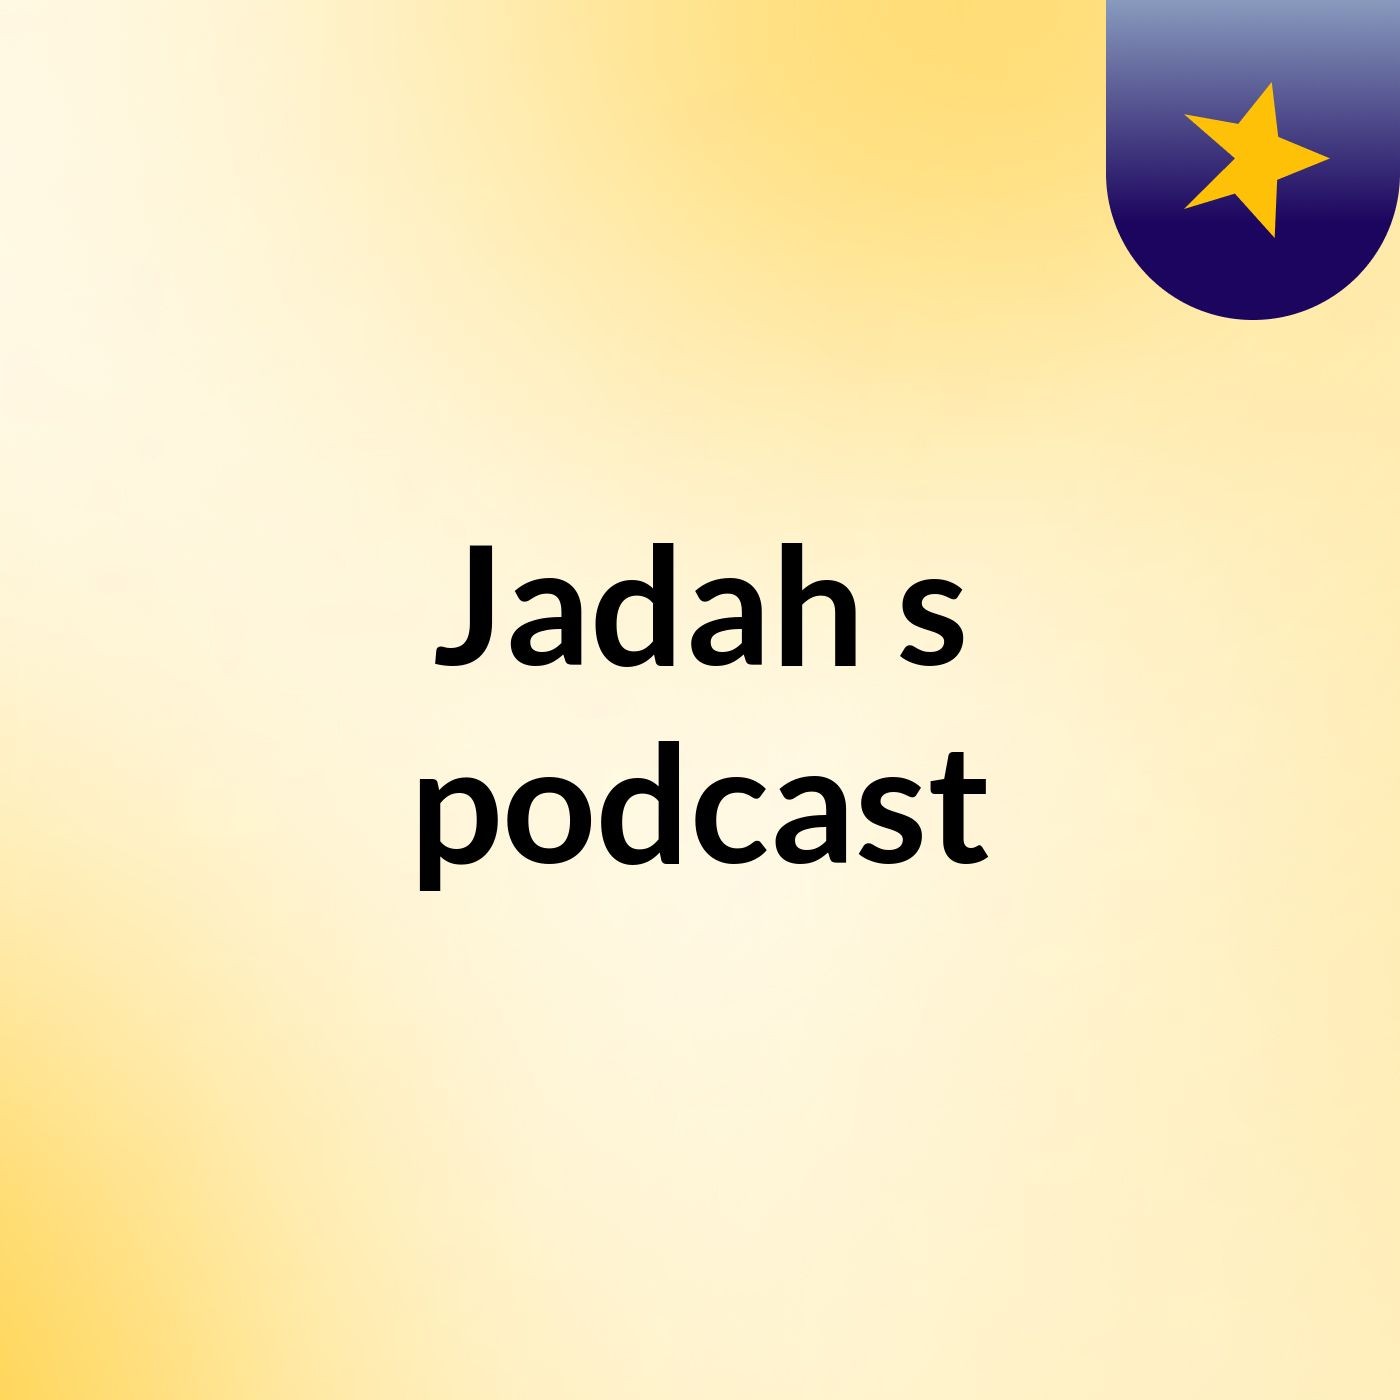 Episode 3 - Jadah's podcast